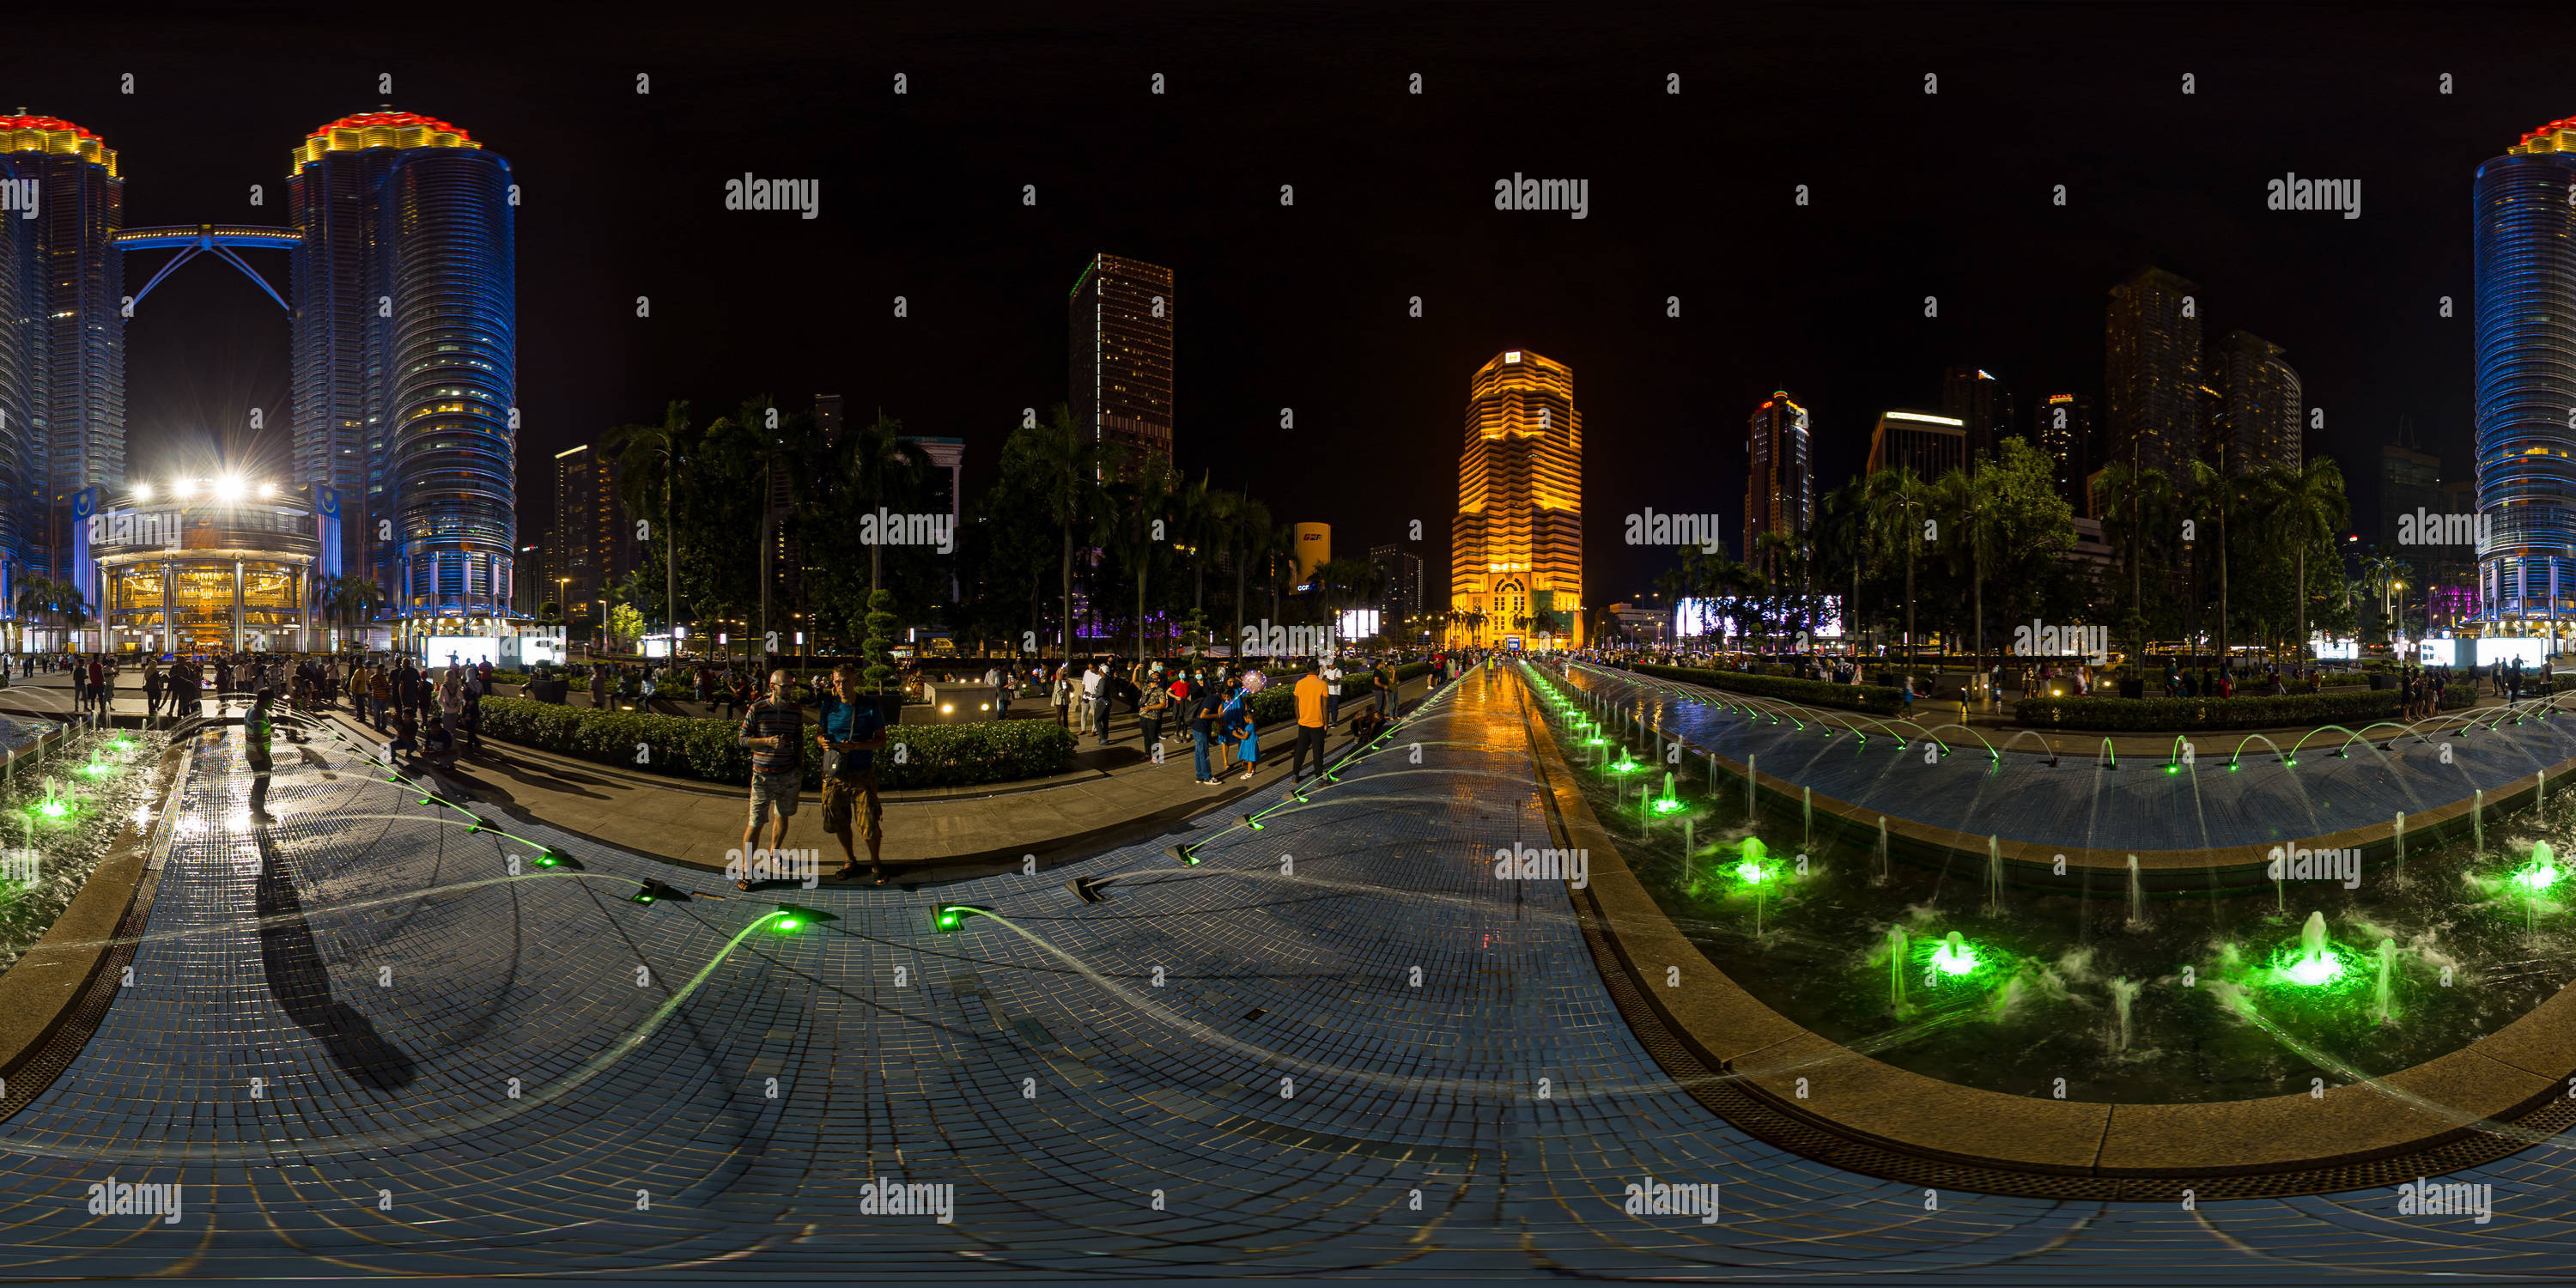 360 degree panoramic view of Fountain show at night in Kuala Lumpur.